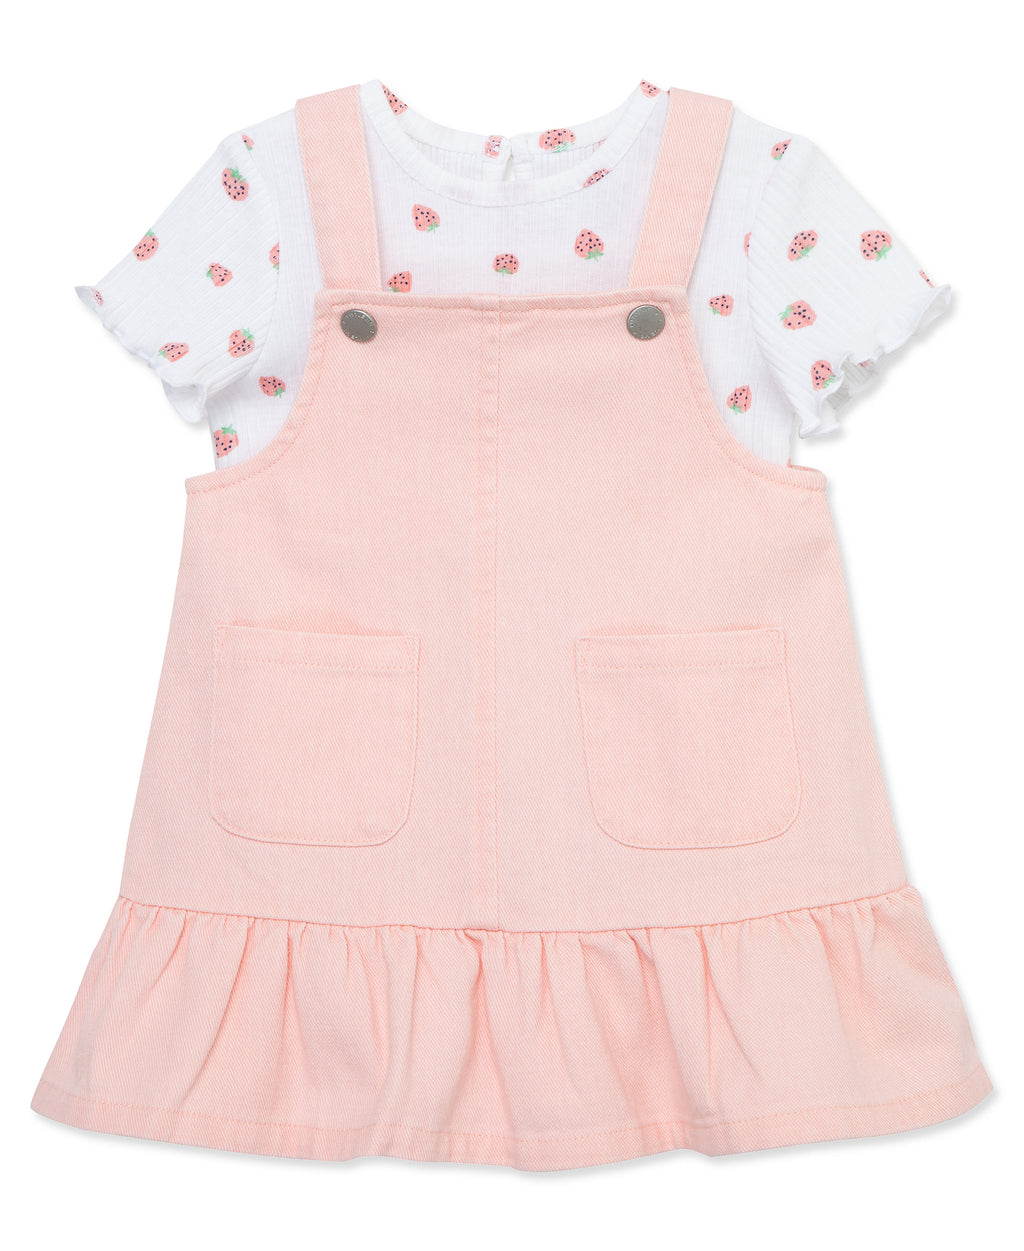 Strawberry Woven Jumper Dress Set (12M-24M) - Little Me